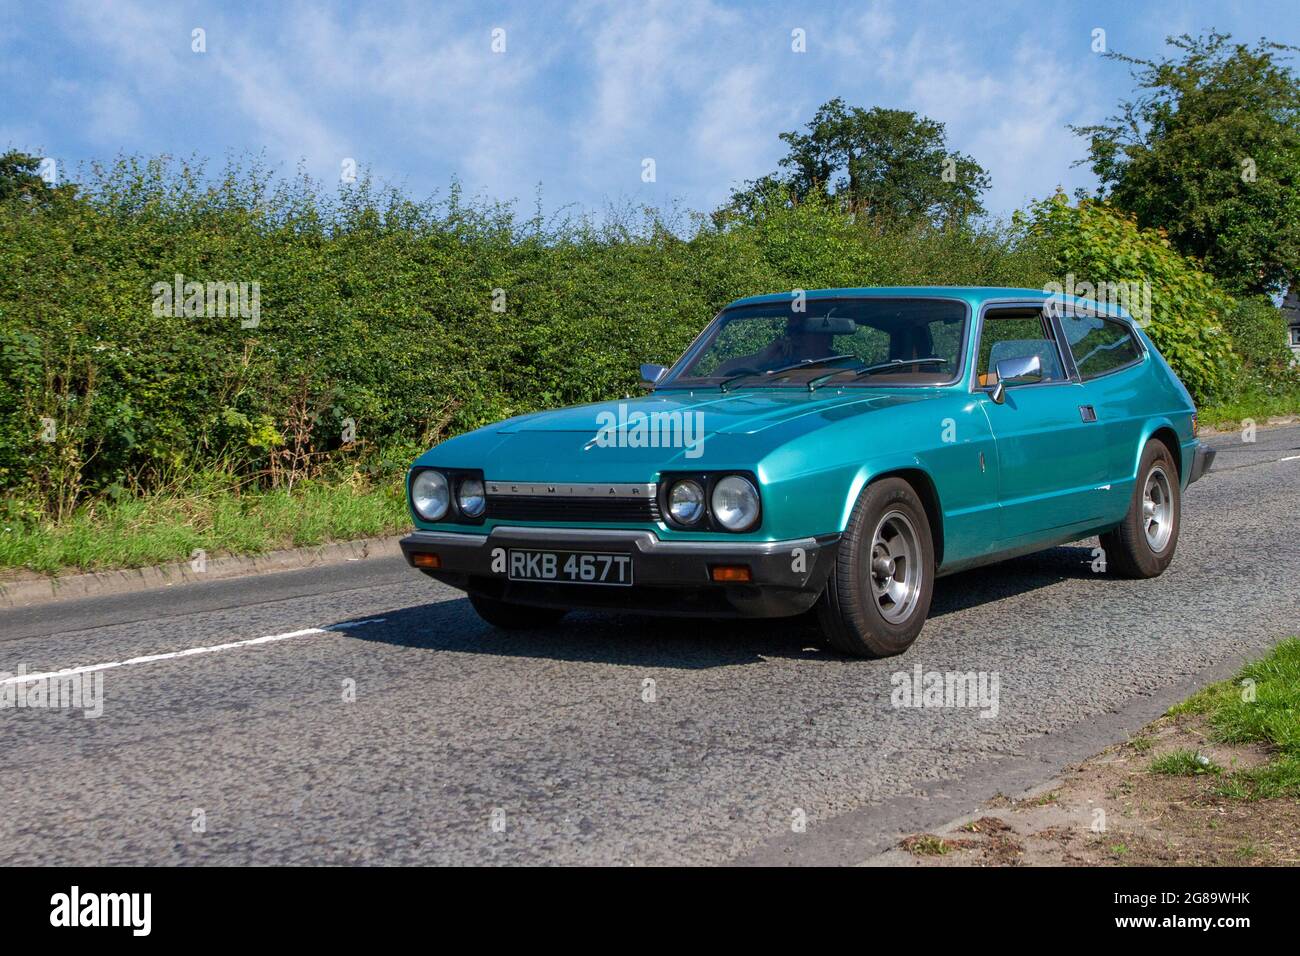 1978 70er Jahre grünes Reliant Scimitar 2dr Coupé, auf dem Weg zur Capesthorne Hall Classic July Car Show, Ceshire, Großbritannien Stockfoto